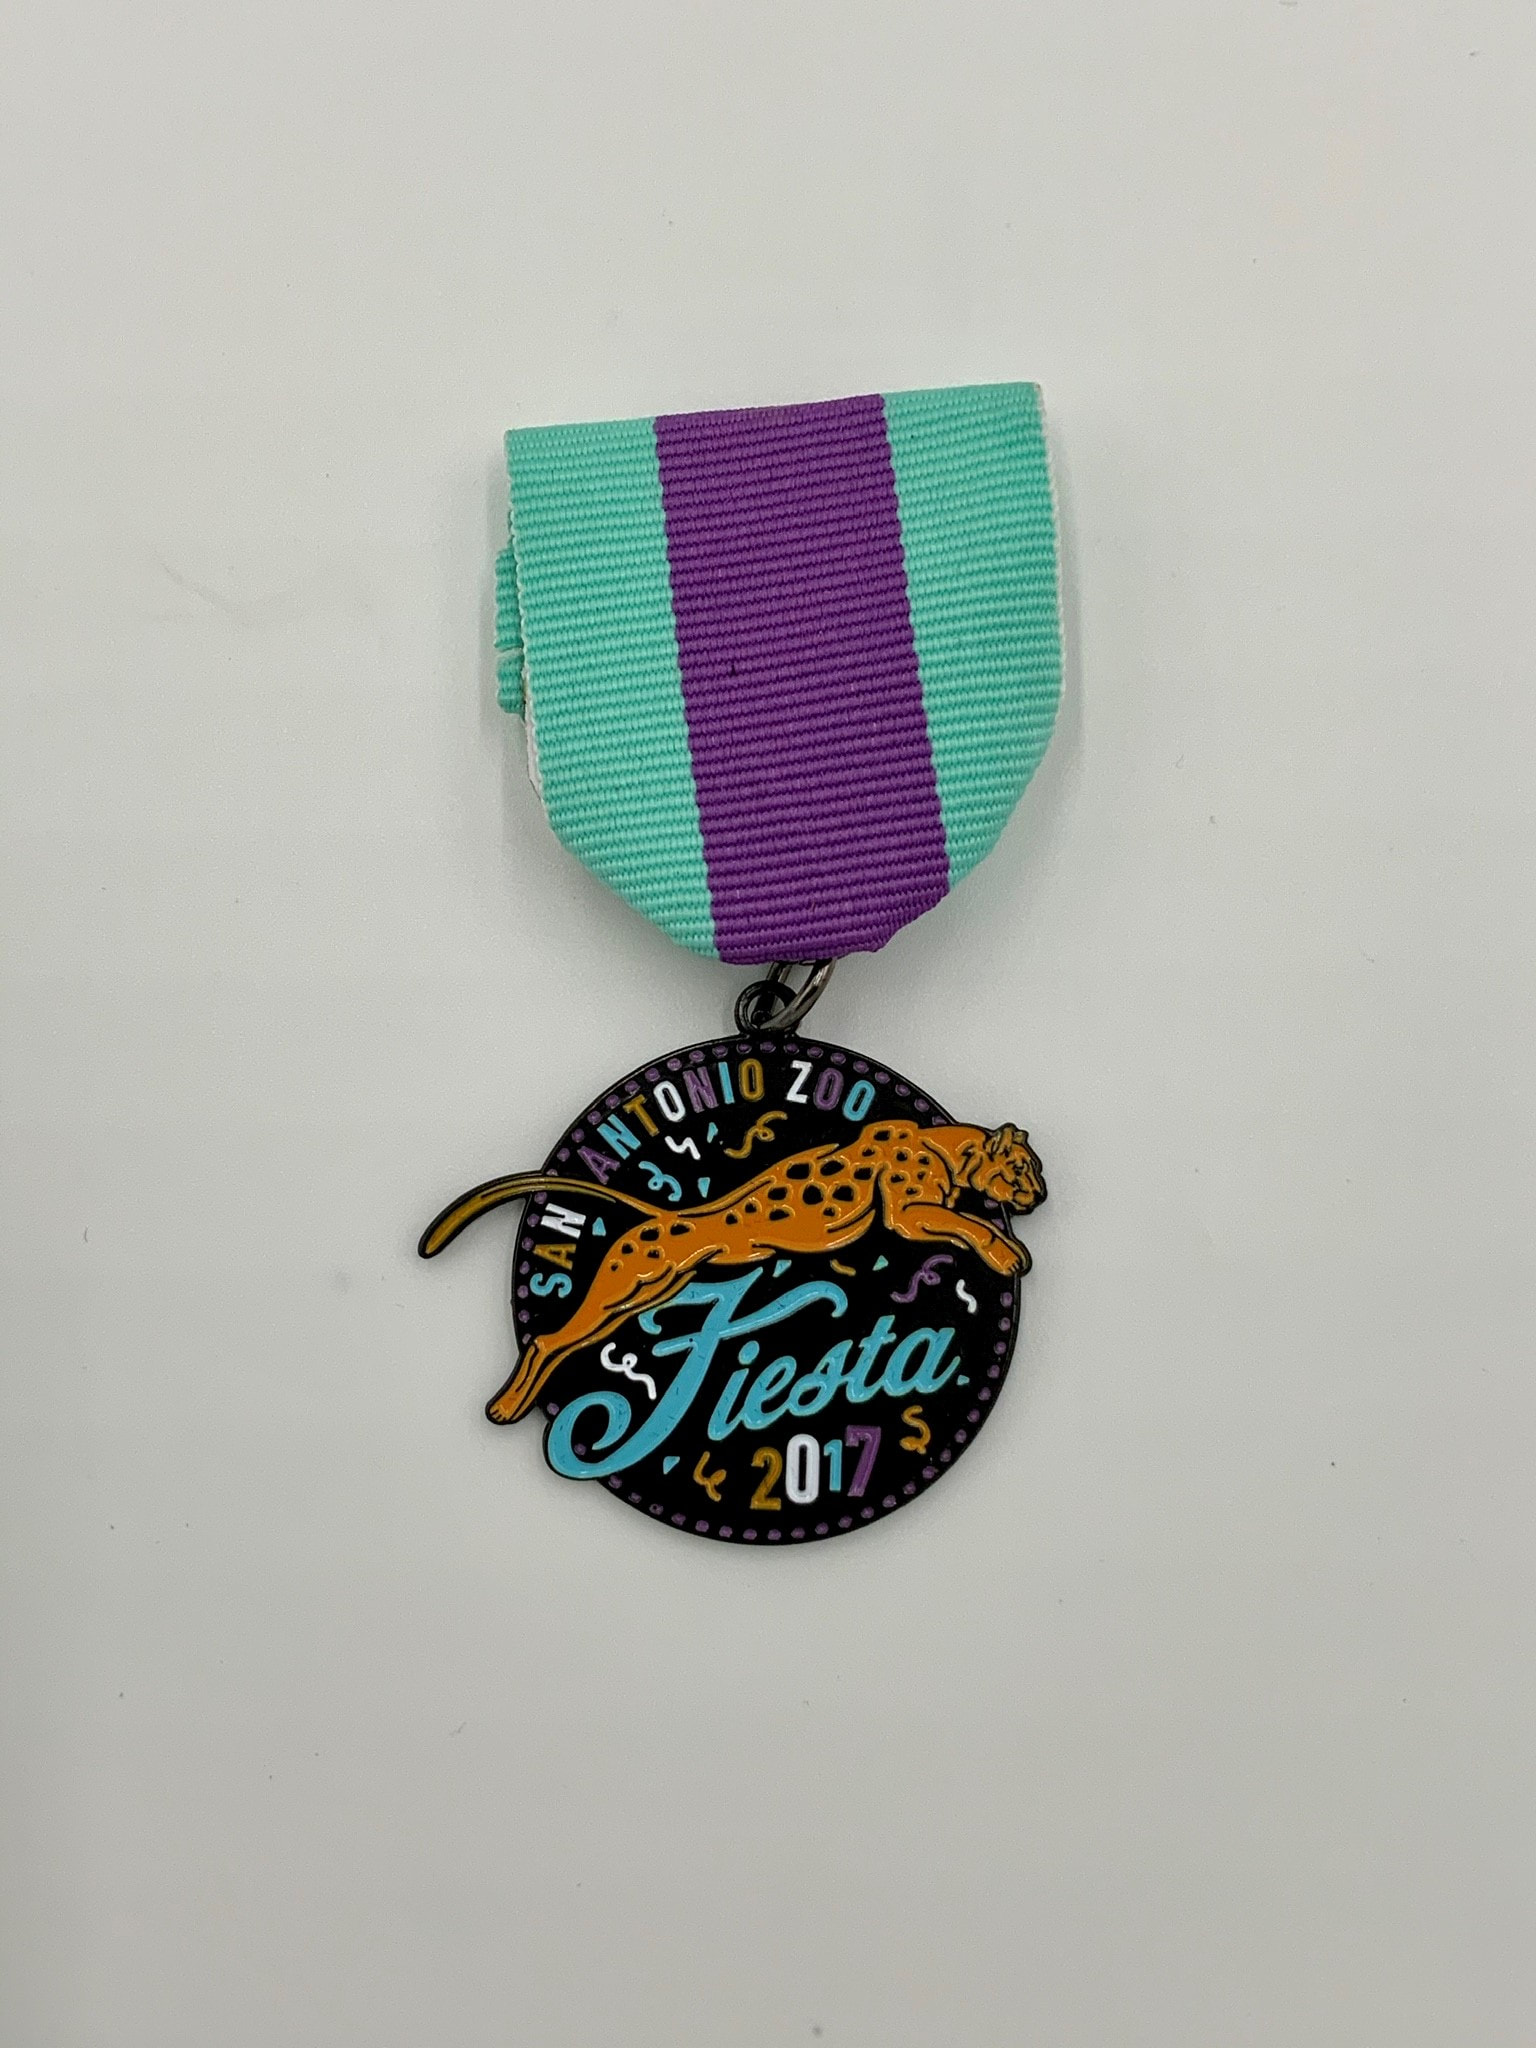 2018 San Antonio Zoo Fiesta Medal